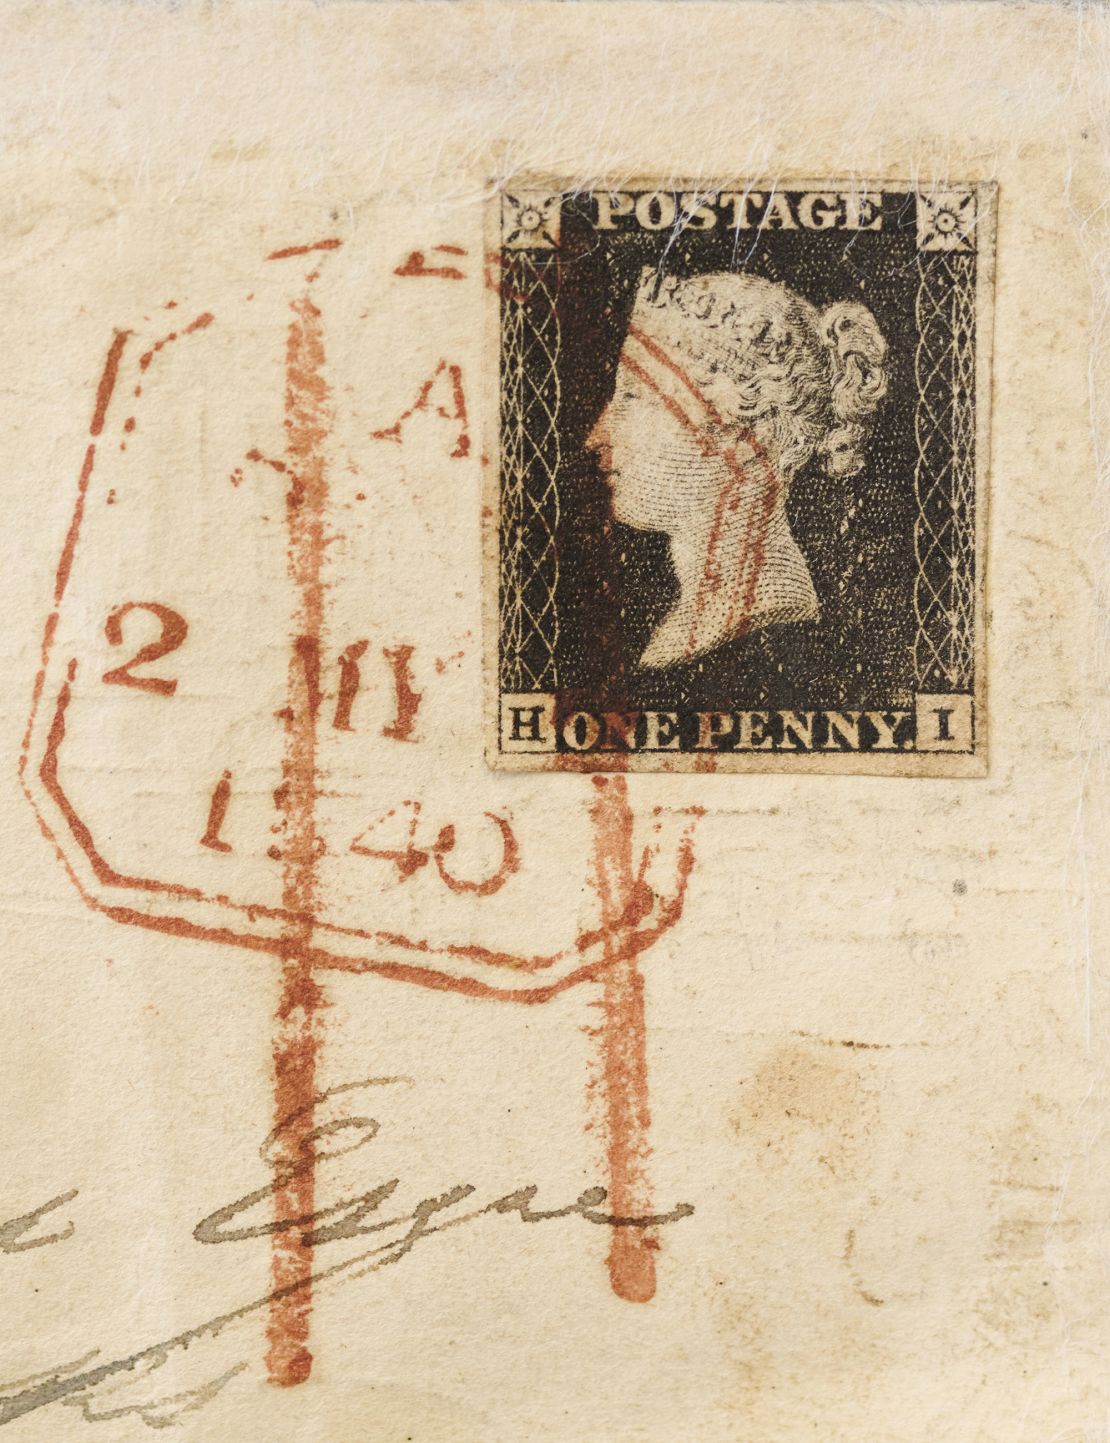 The Penny Black stamp revolutionized the postal service.